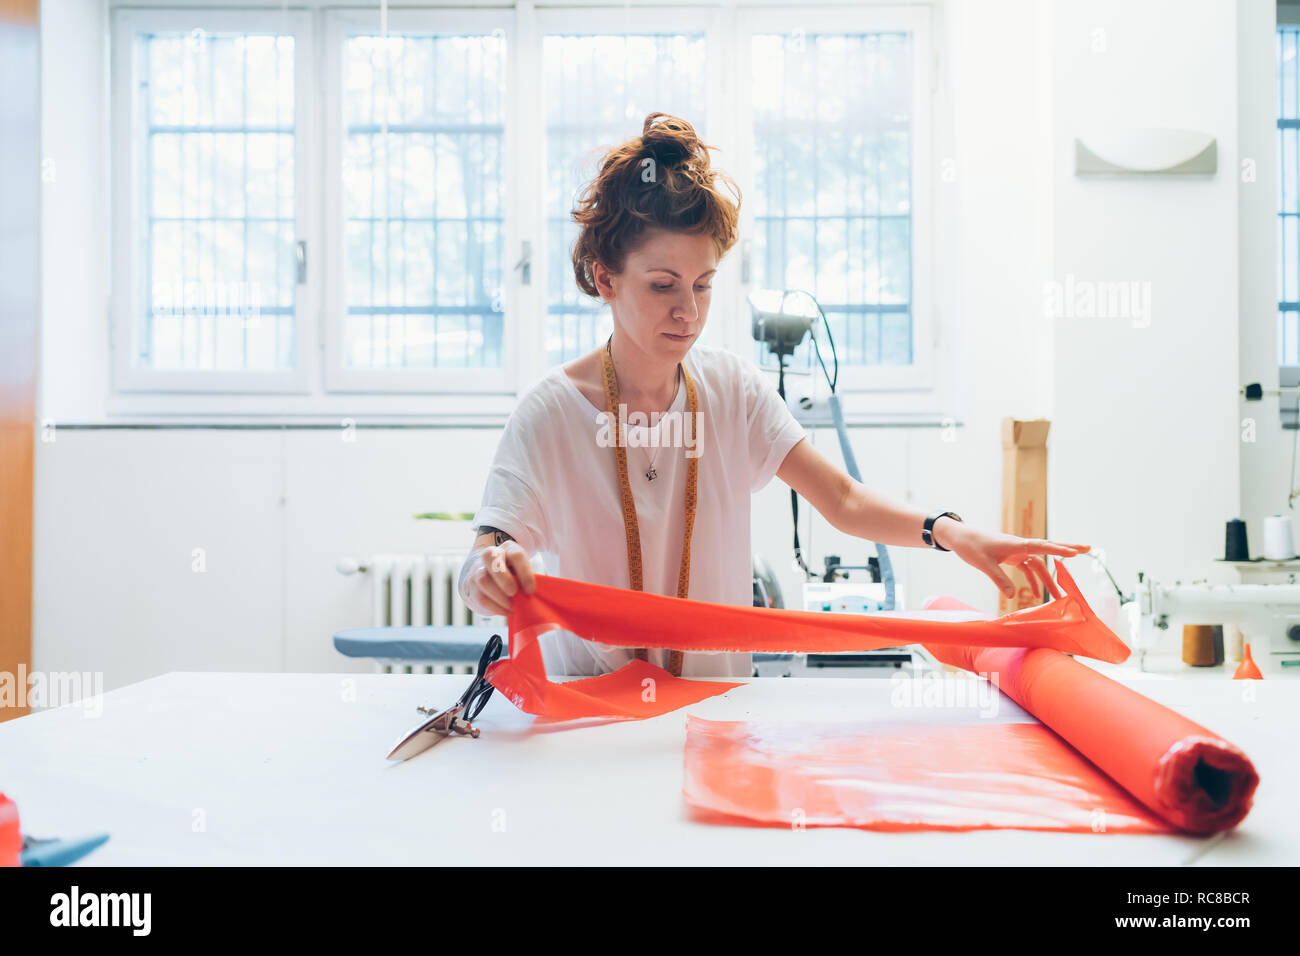 Fashion designer unrolling textile on workbench Stock Photo